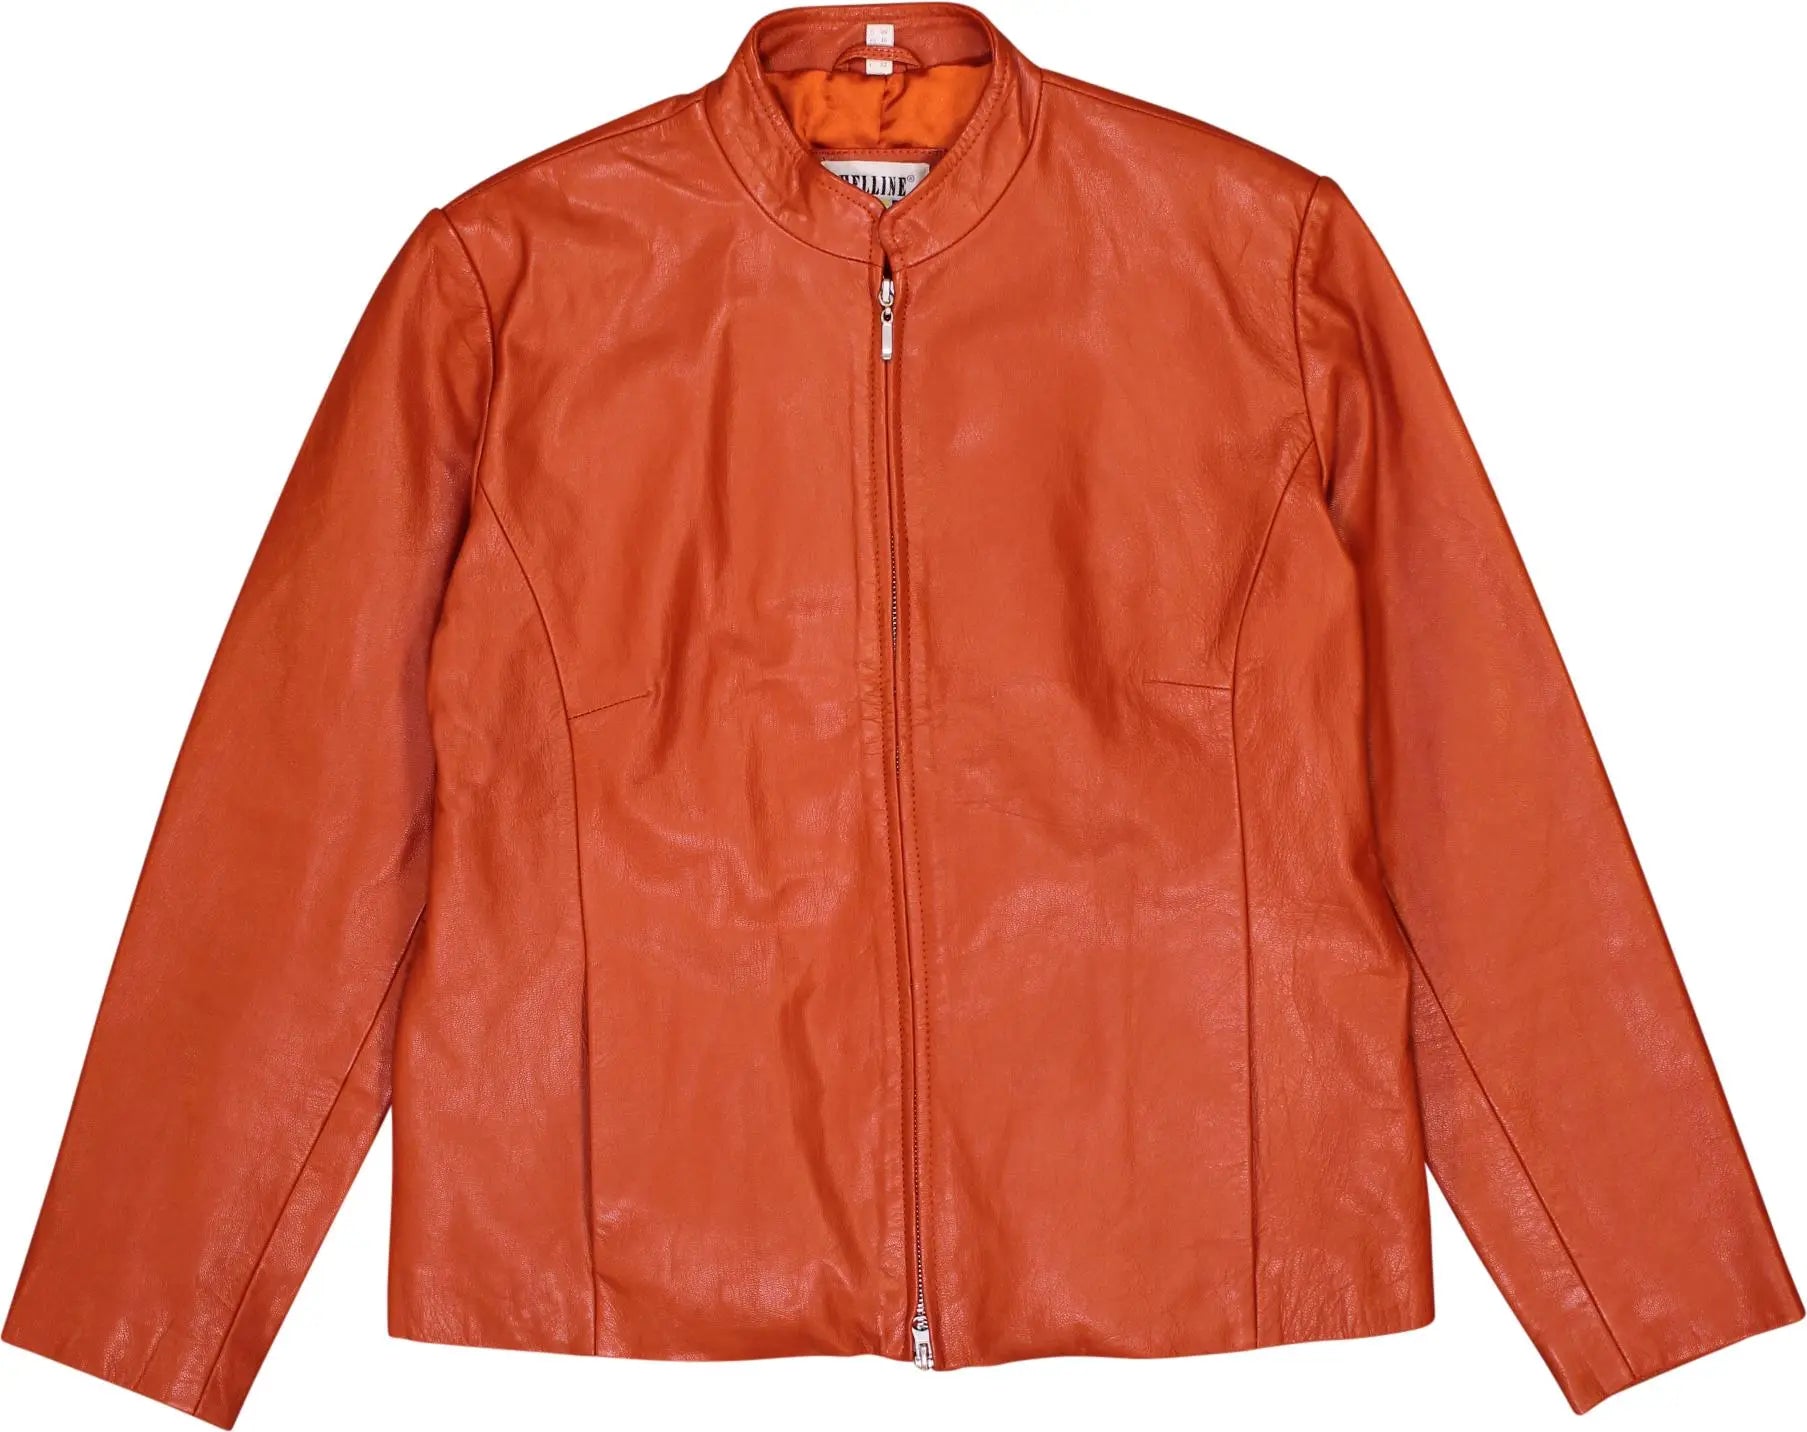 Helline - Orange Leather Jacket- ThriftTale.com - Vintage and second handclothing